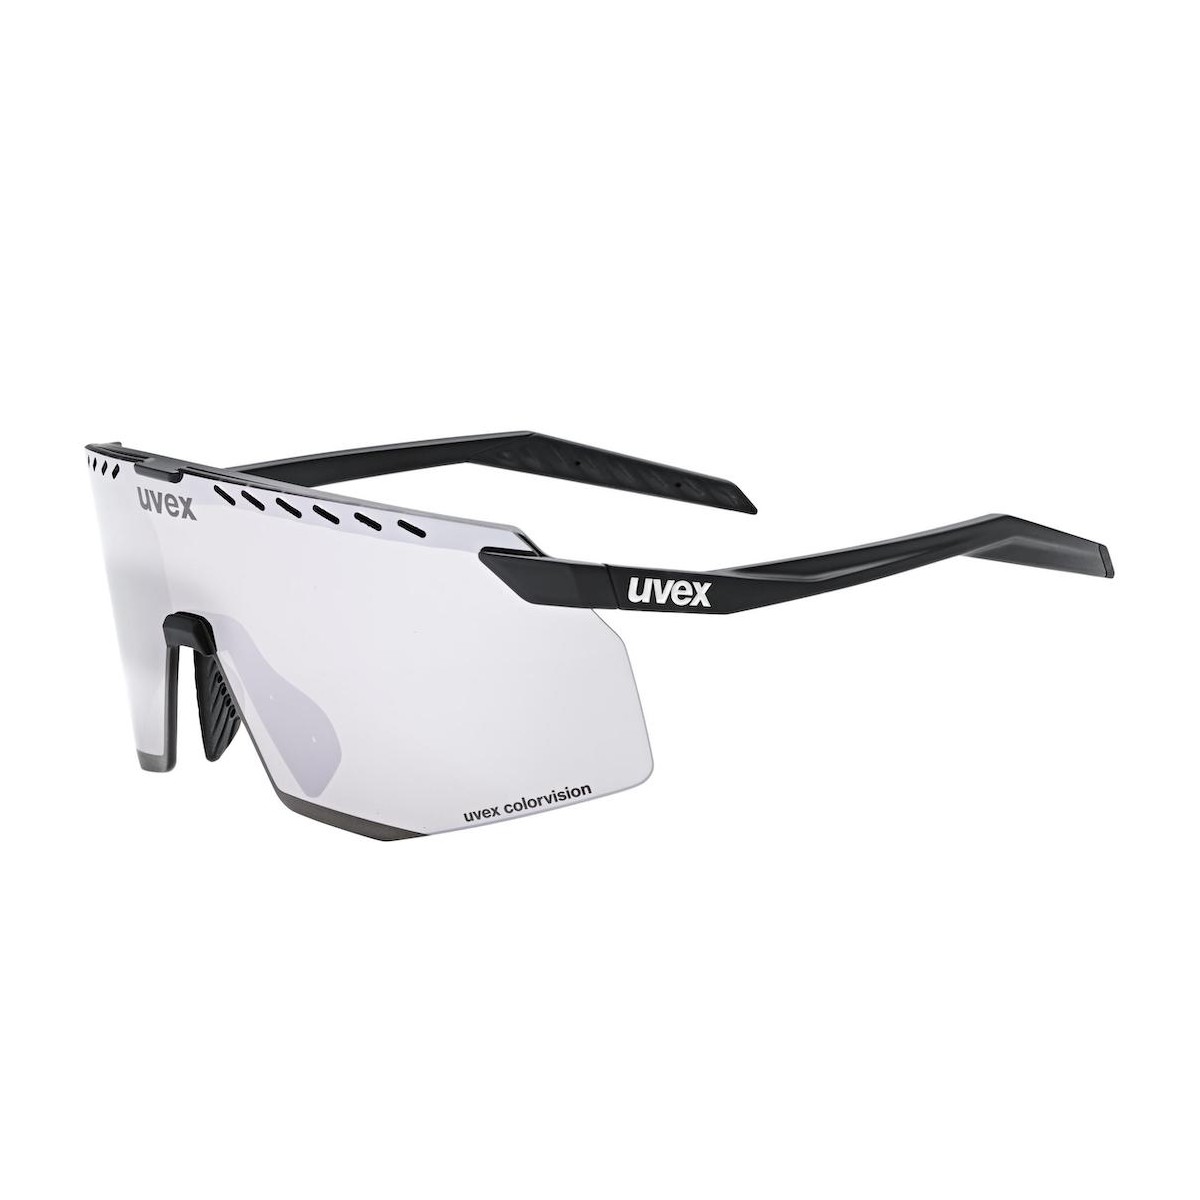 UVEX PACE STAGE CV sunglasses - black matt/silver